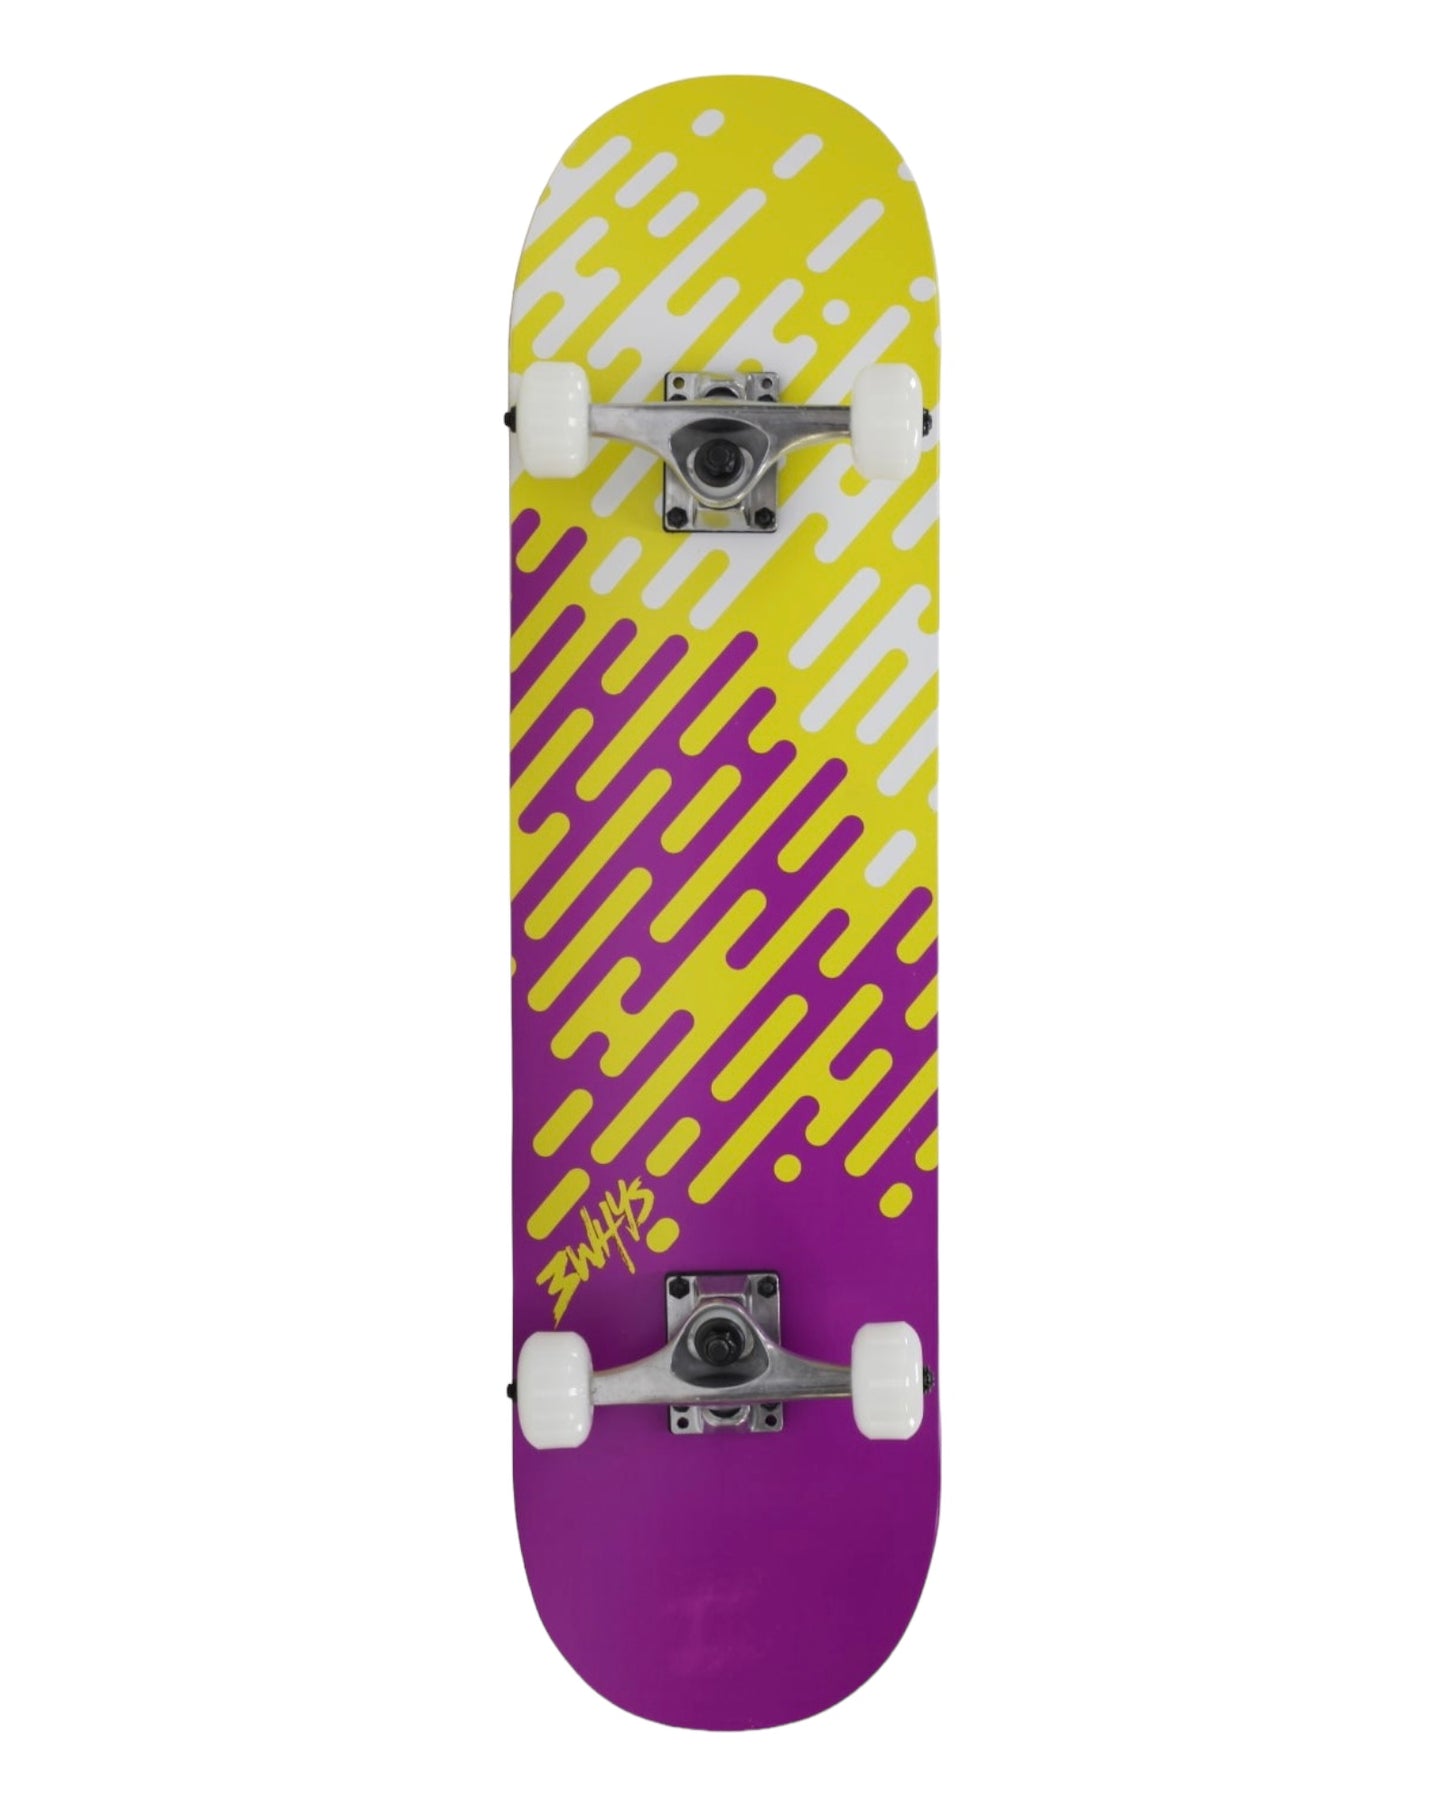 Mix Drip Complete Skateboard